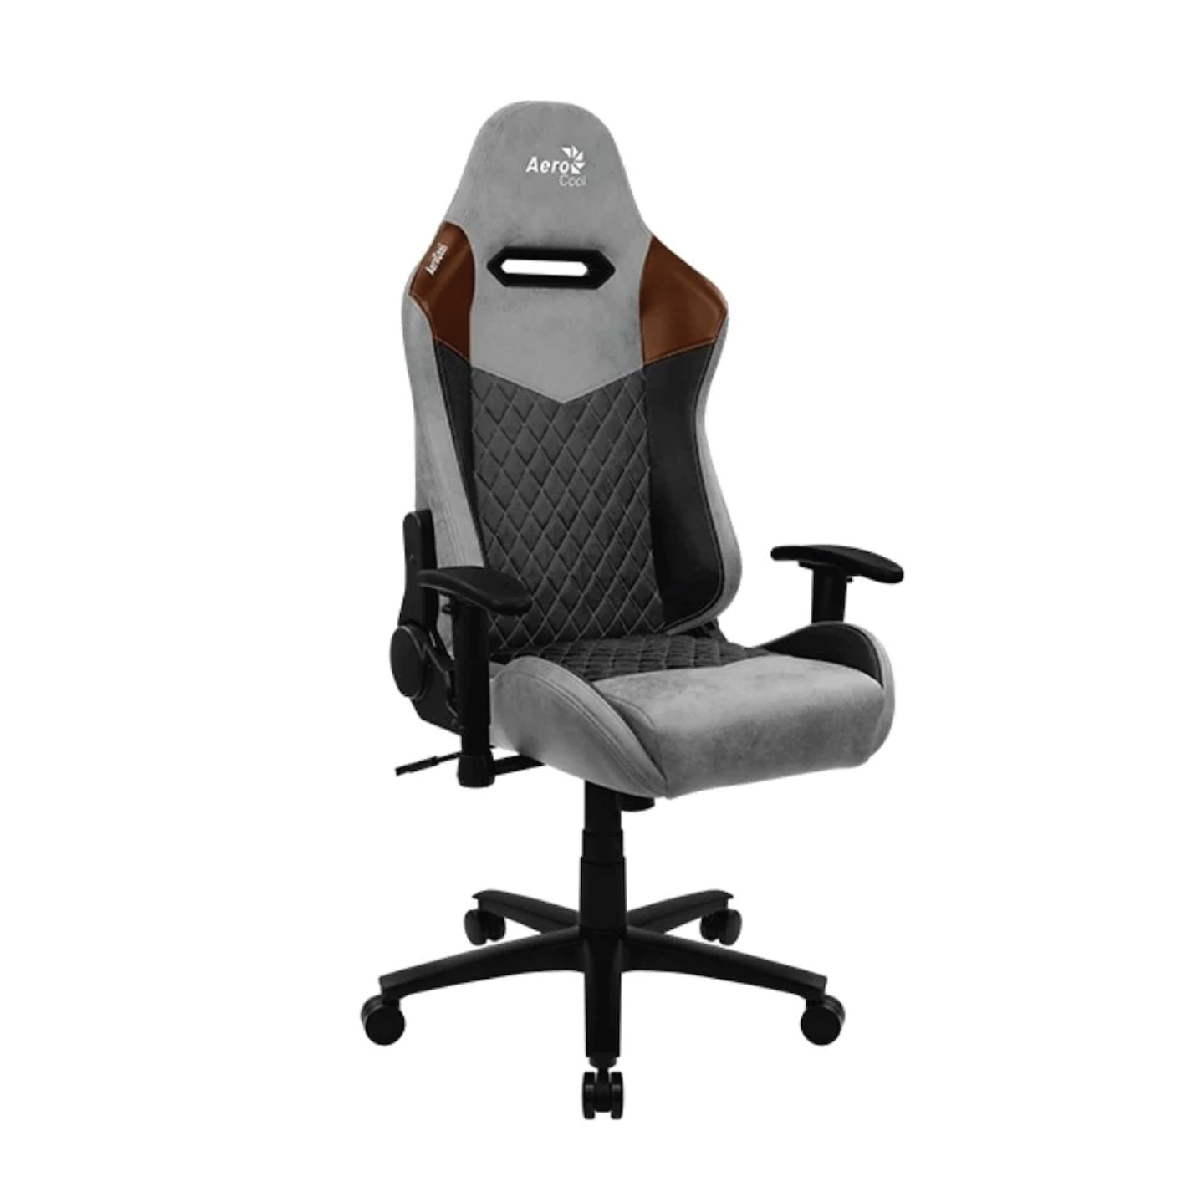 Aerocool Duke Gaming Chair เป็นเก้าอี้เกมมิ่งแนะนำ High Density Foam คุณภาพสูง ทำให้เบาะนุ่ม นั่งสบาย